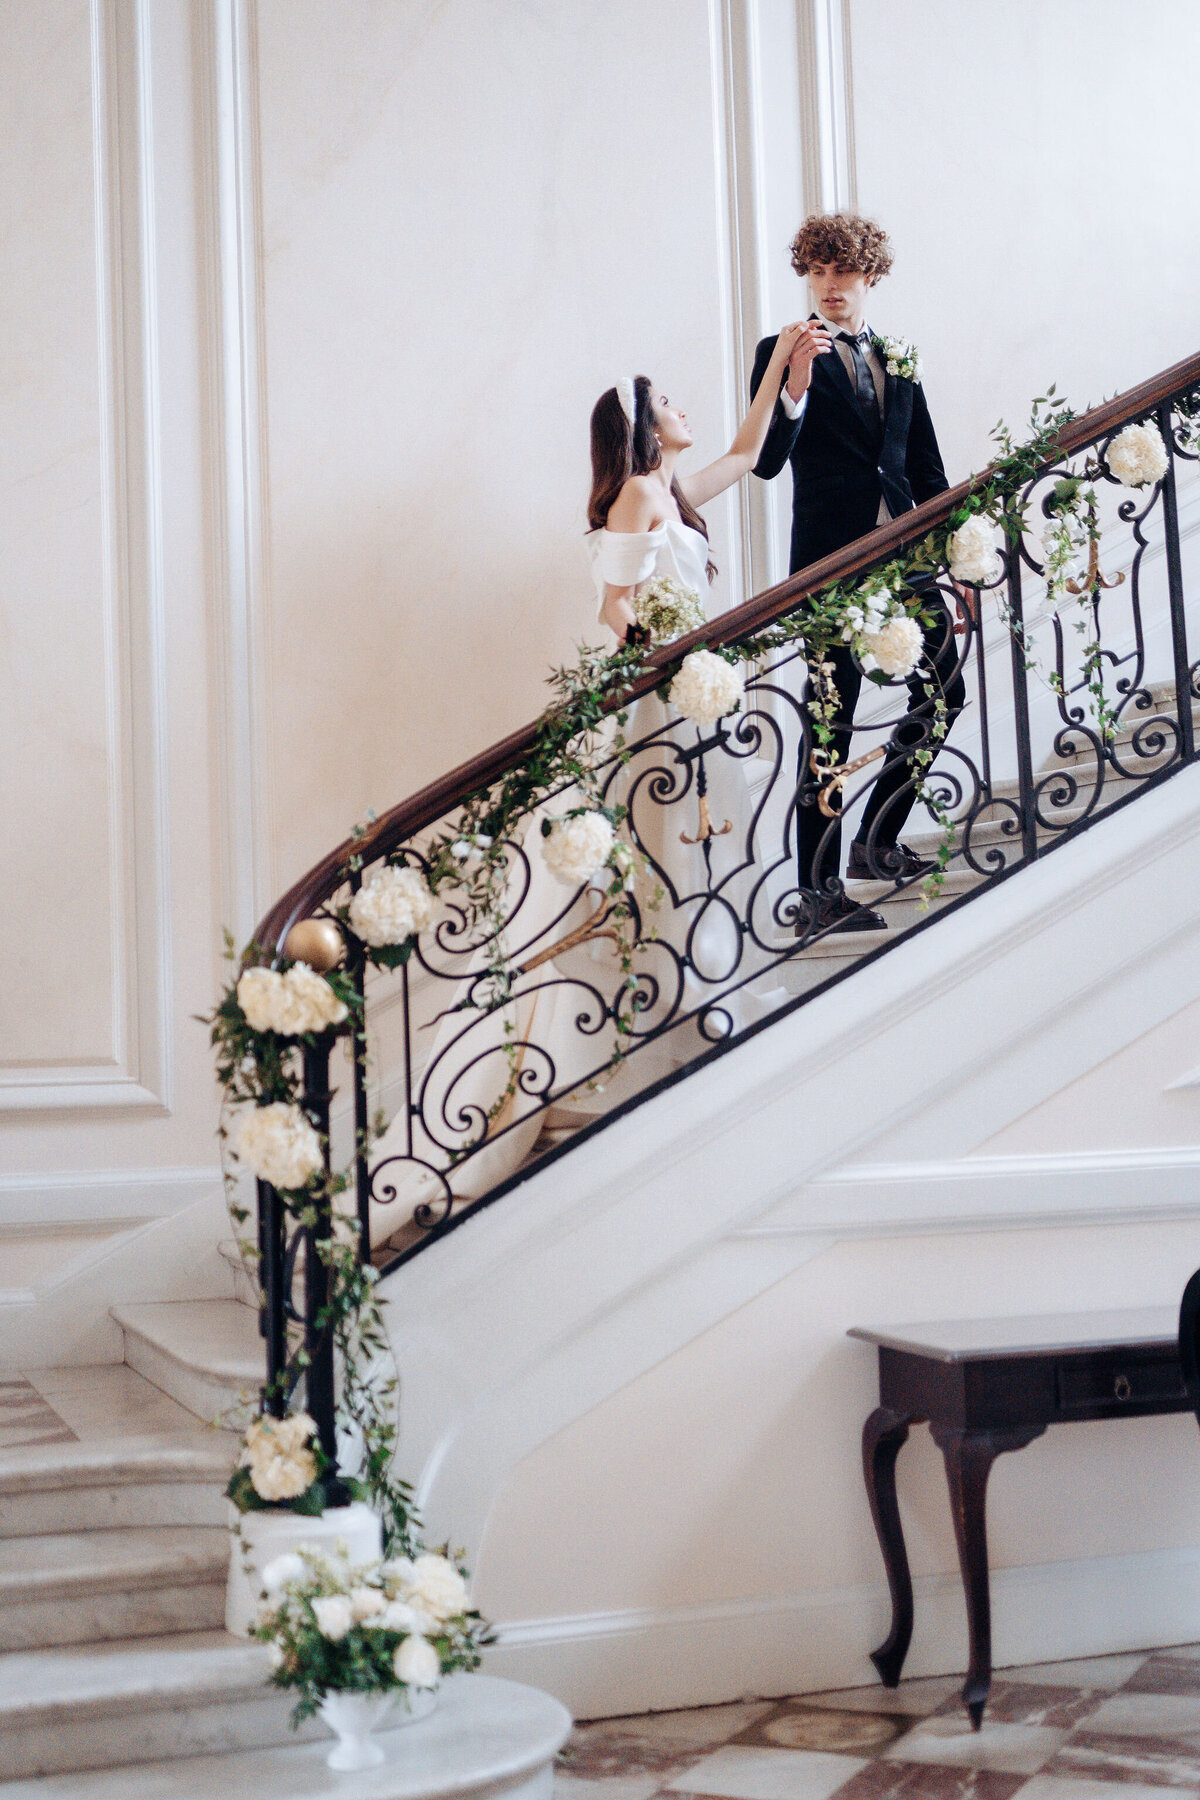 092-Chateau-de-Santeny-Paris-France-Inspiration-Love-Story Elopement-Cinematic-Romance-Destination-Wedding-Editorial-Luxury-Fine-Art-Lisa-Vigliotta-Photography